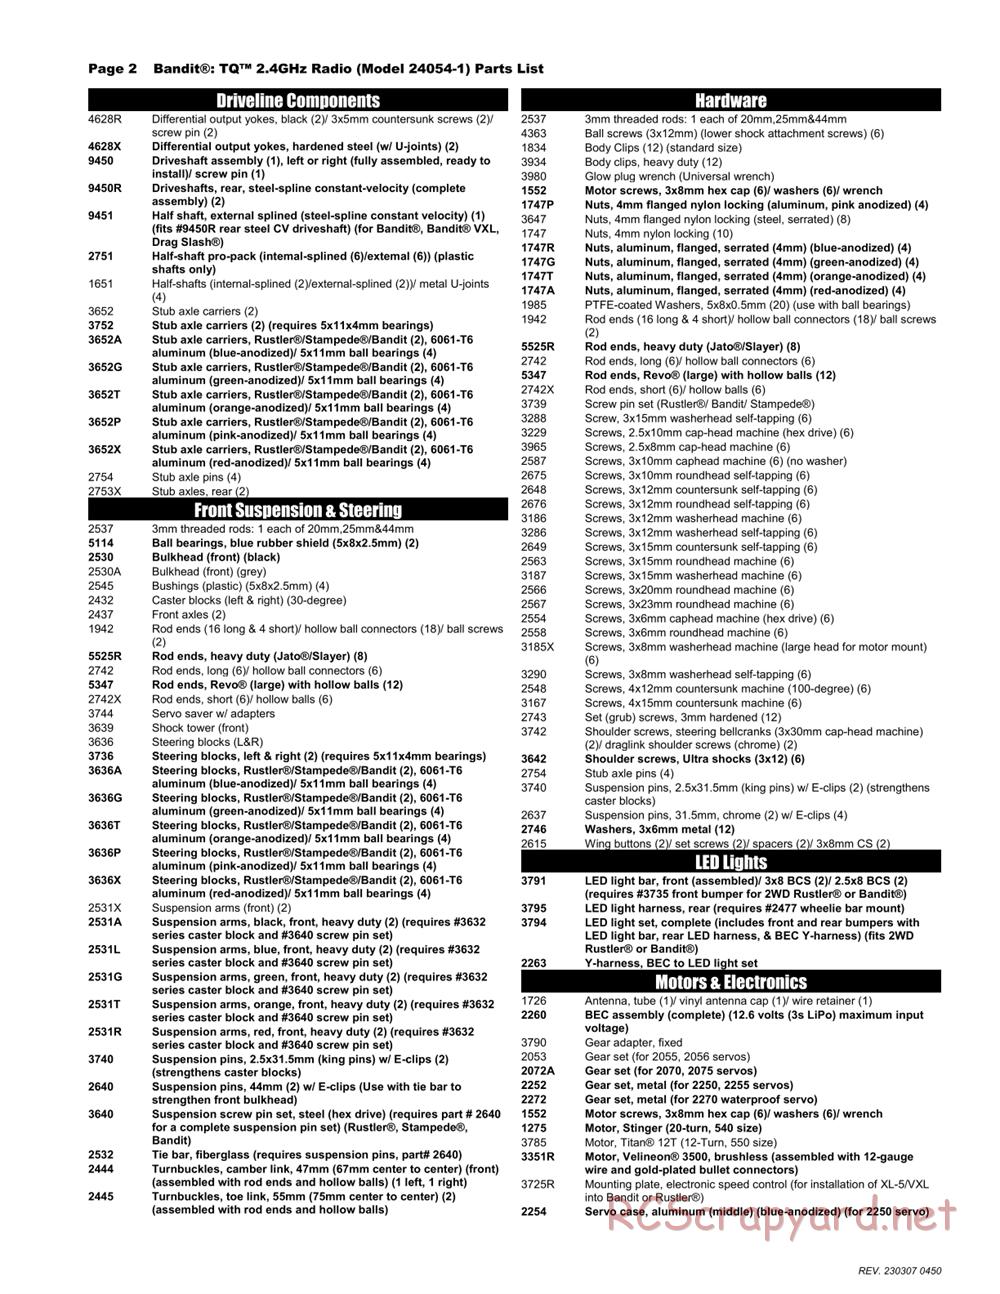 Traxxas - Bandit XL-5 (2015) - Parts List - Page 2